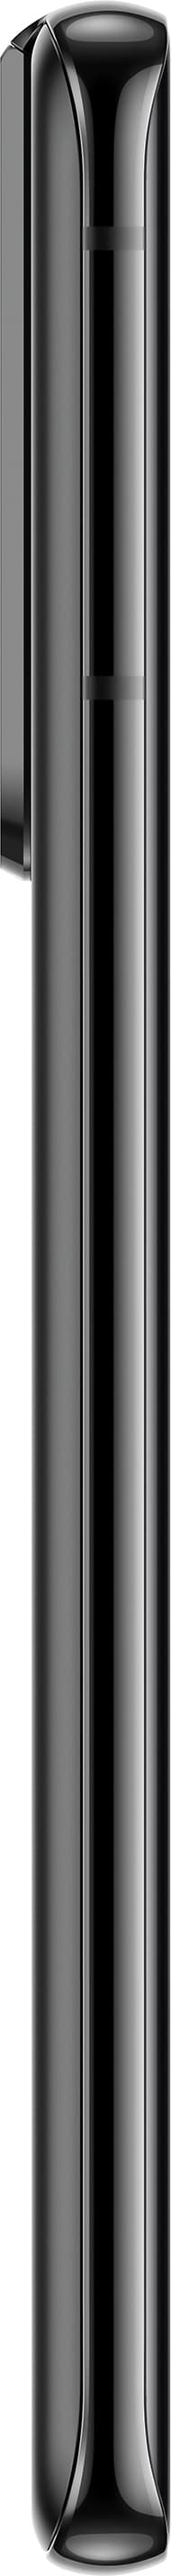 Samsung Galaxy S21 Ultra 5G 512GB Kaksois-SIM Phantom black